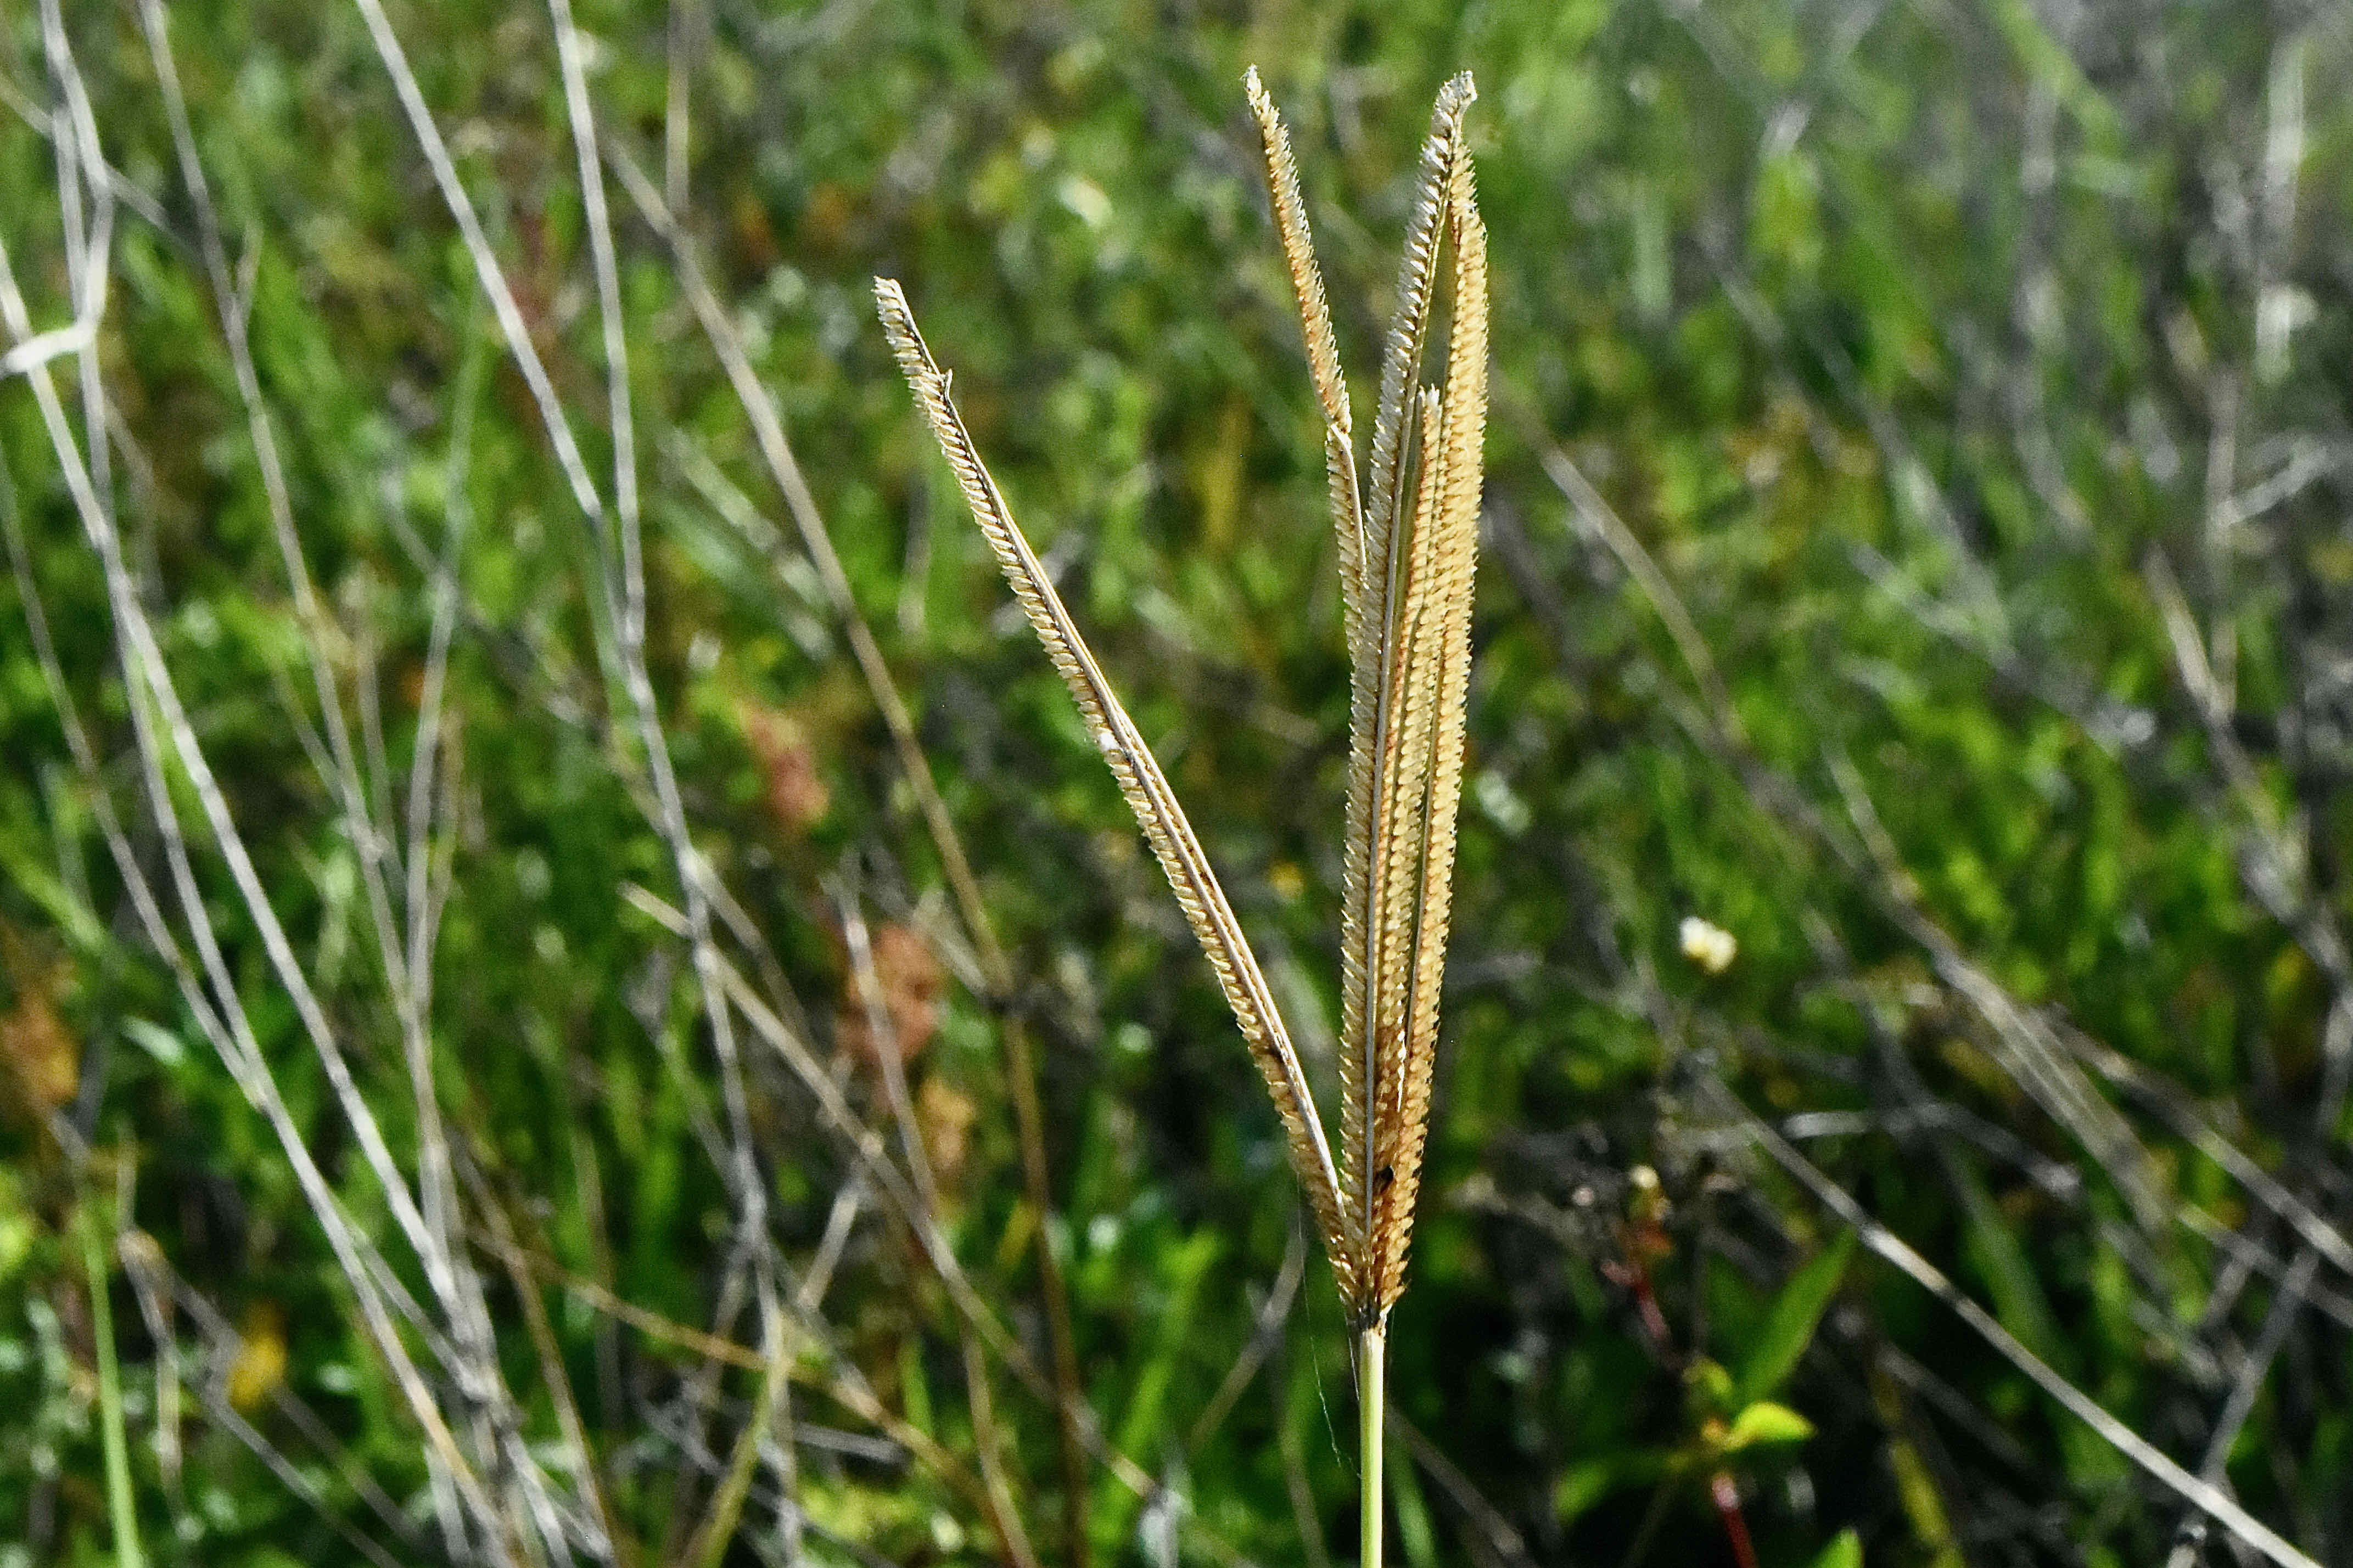 Common Fingergrass